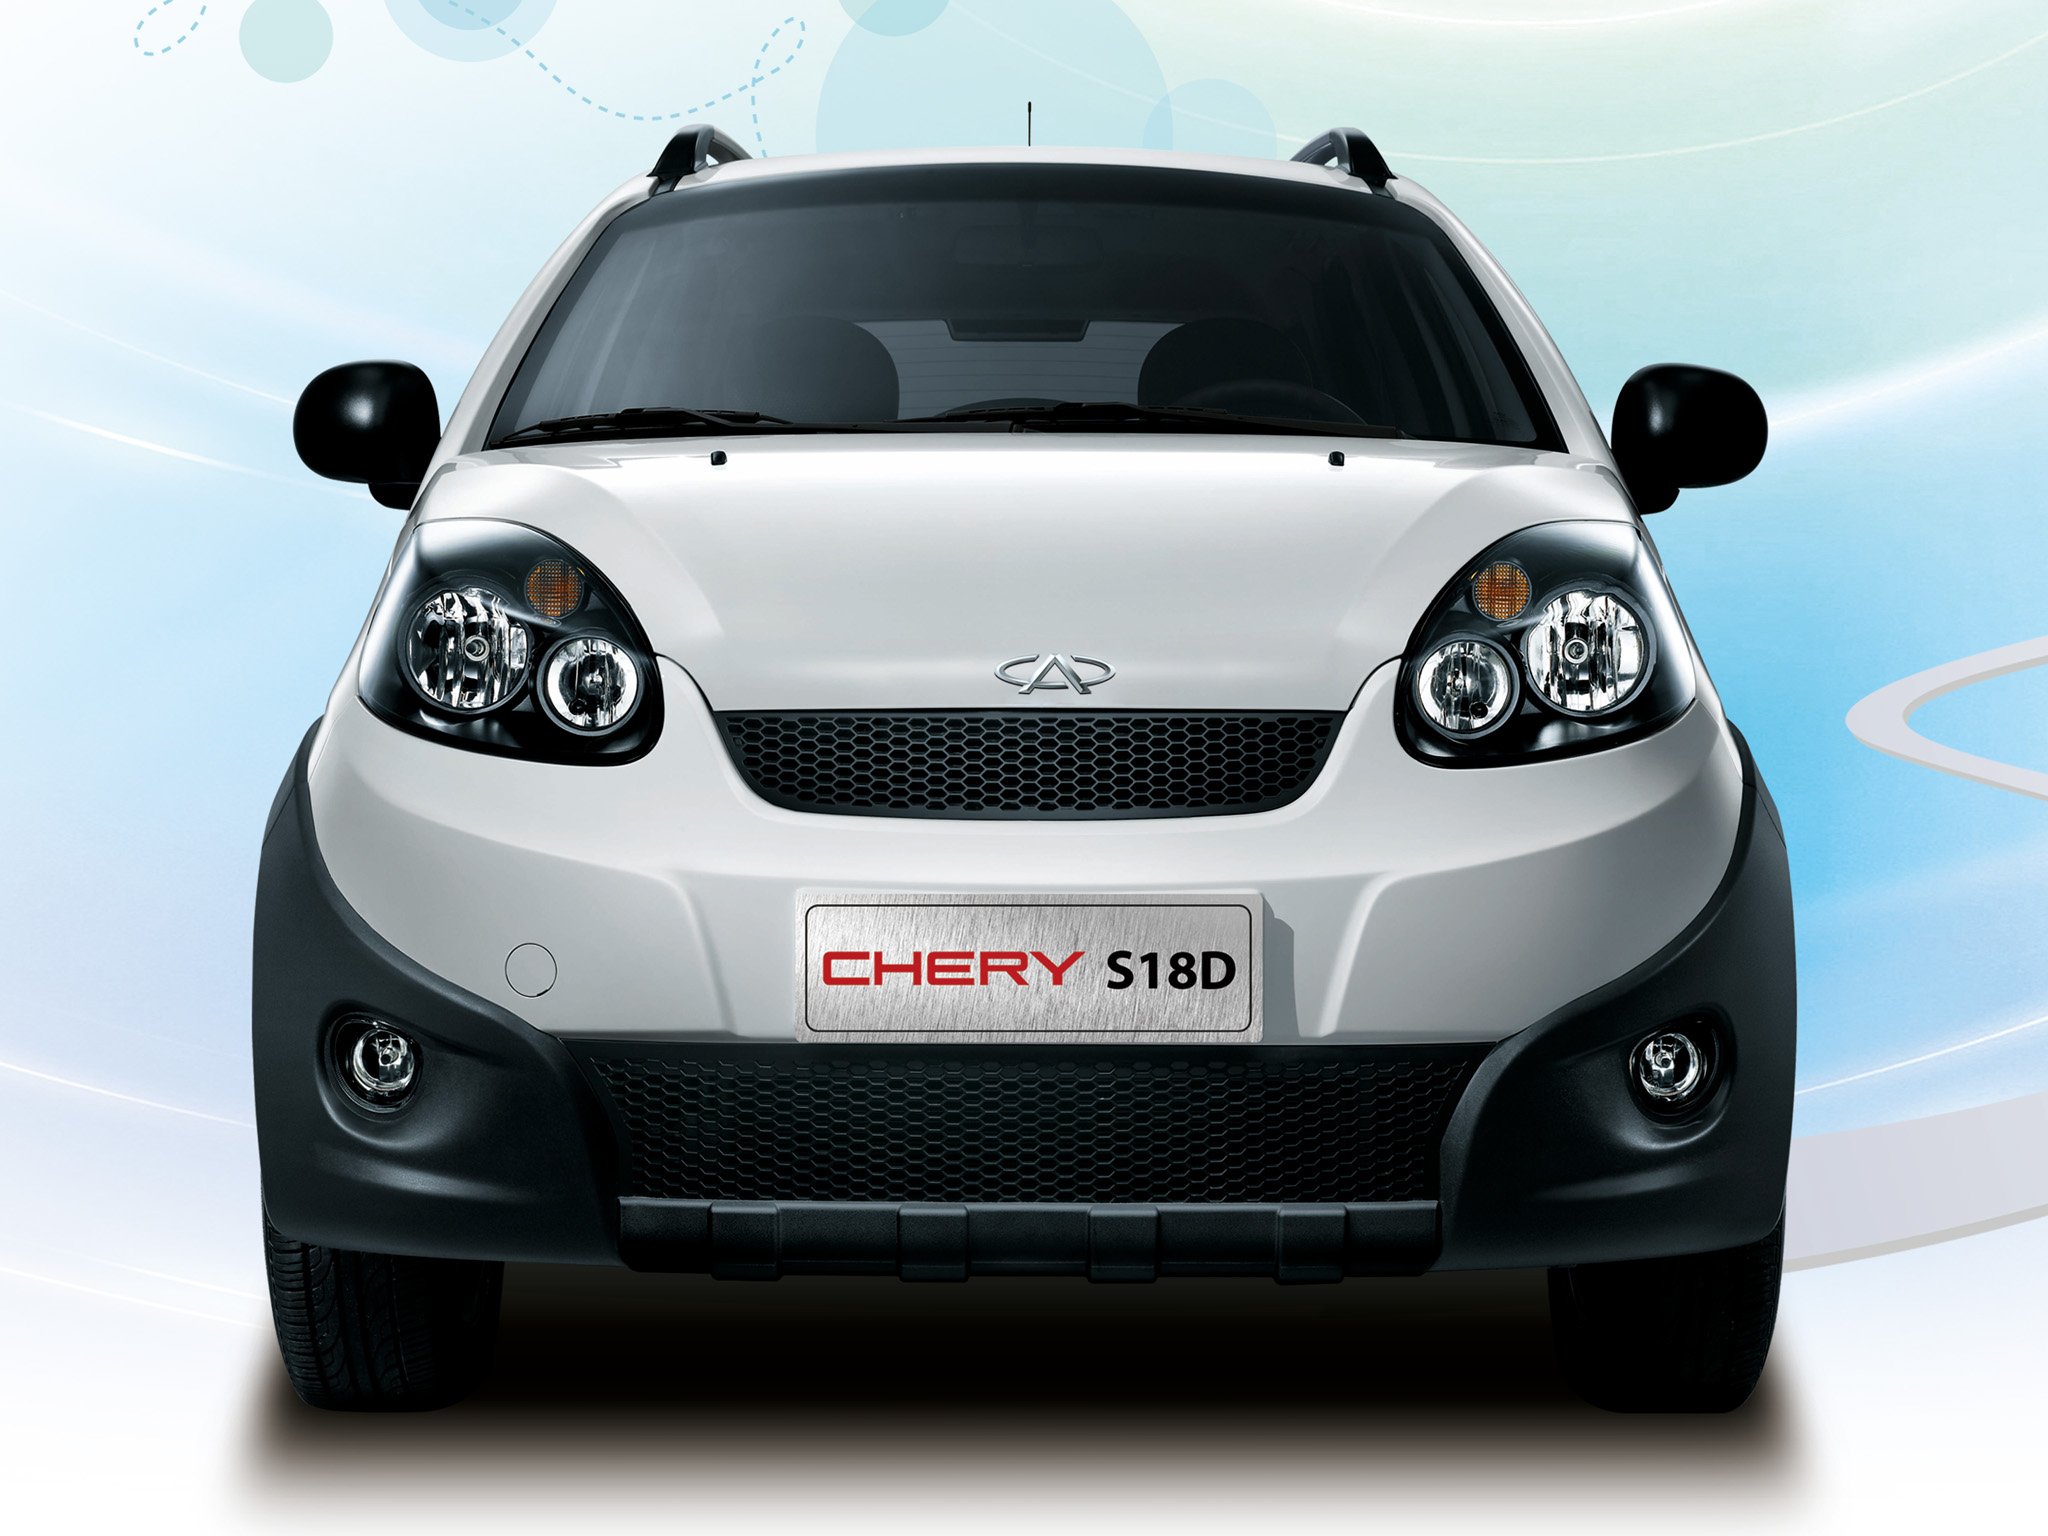 18 d 6. Chery indis s18d. Chery s18d. Машина Chery indis s18d. Chery модель: indis (s18d).